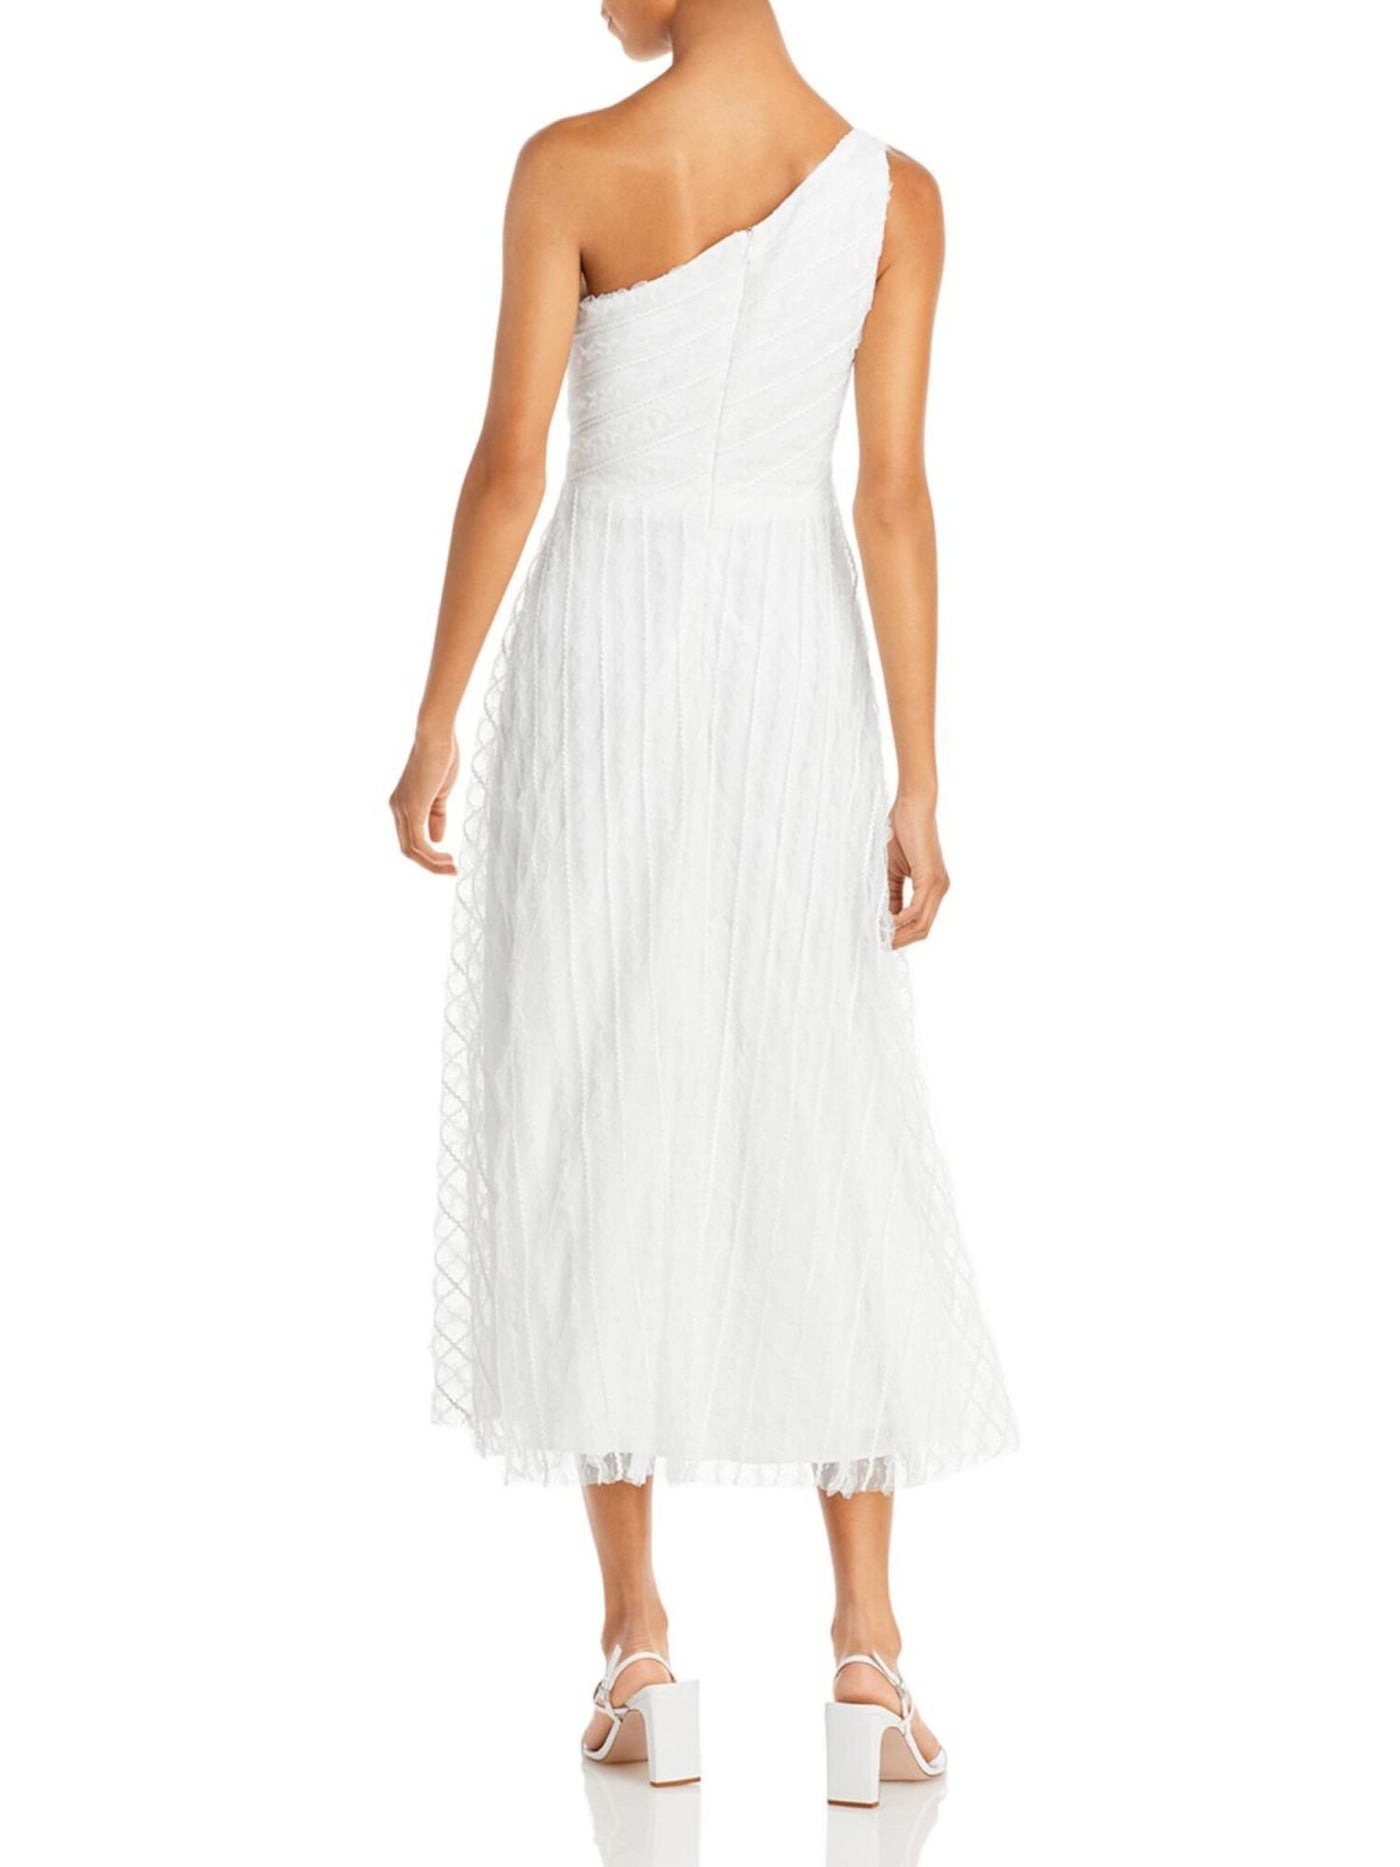 AQUA FORMAL Womens White Zippered Textured Mesh Overlay Lined Sleeveless Asymmetrical Neckline Midi Evening Fit + Flare Dress 6